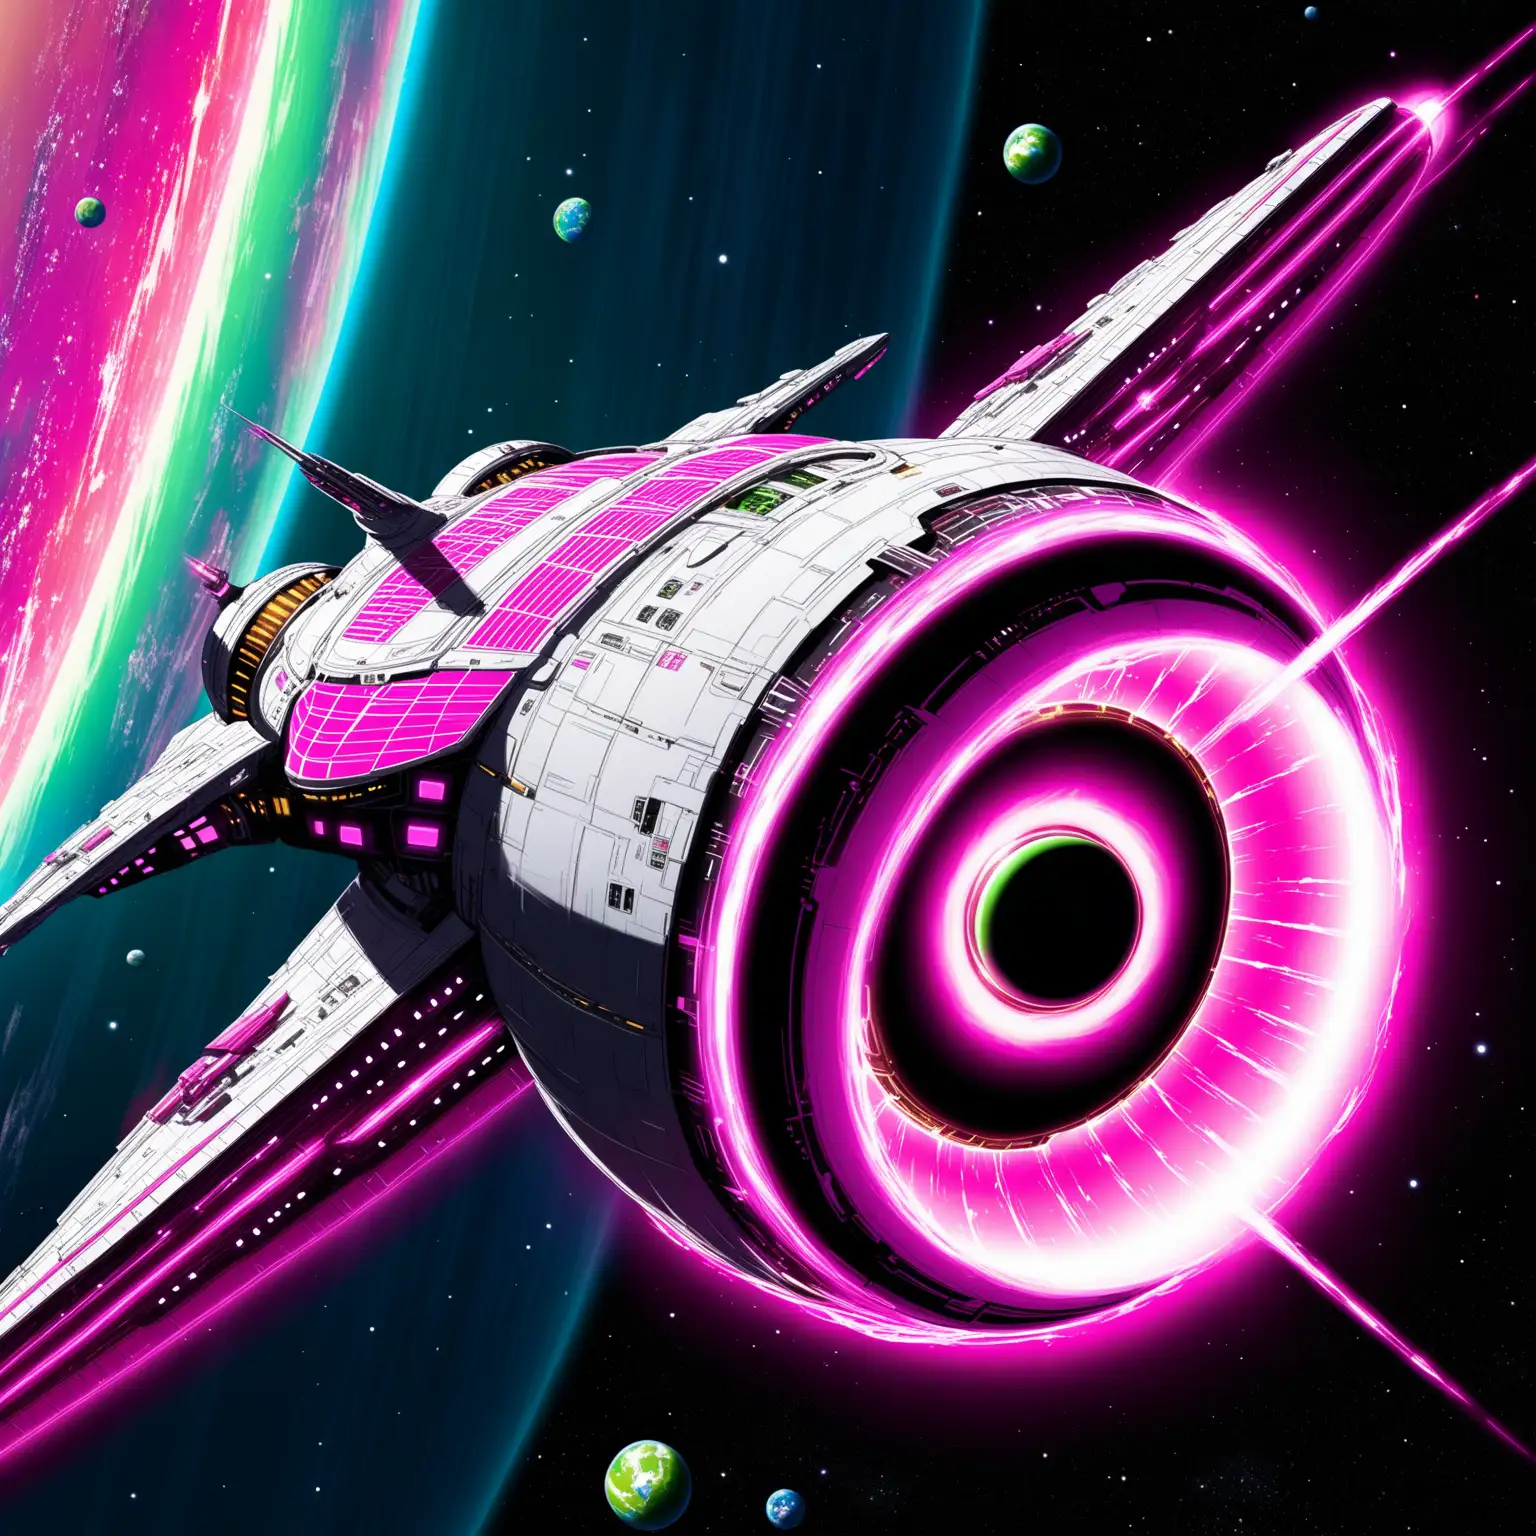 An alien spaceship cruiser powering up in orbit, pink energy ring, green planet 